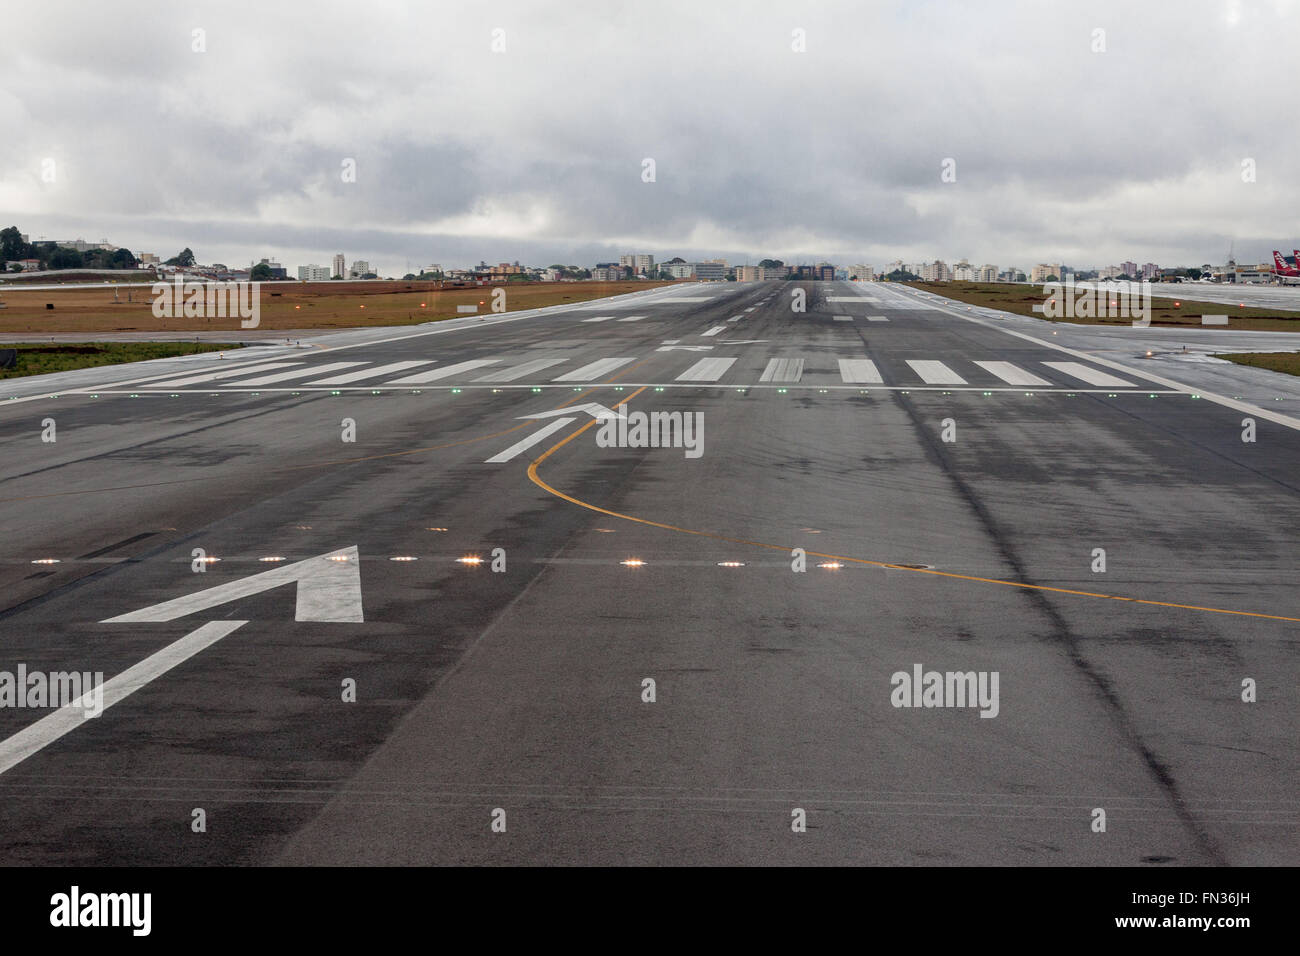 Rainy airport lane Stock Photo